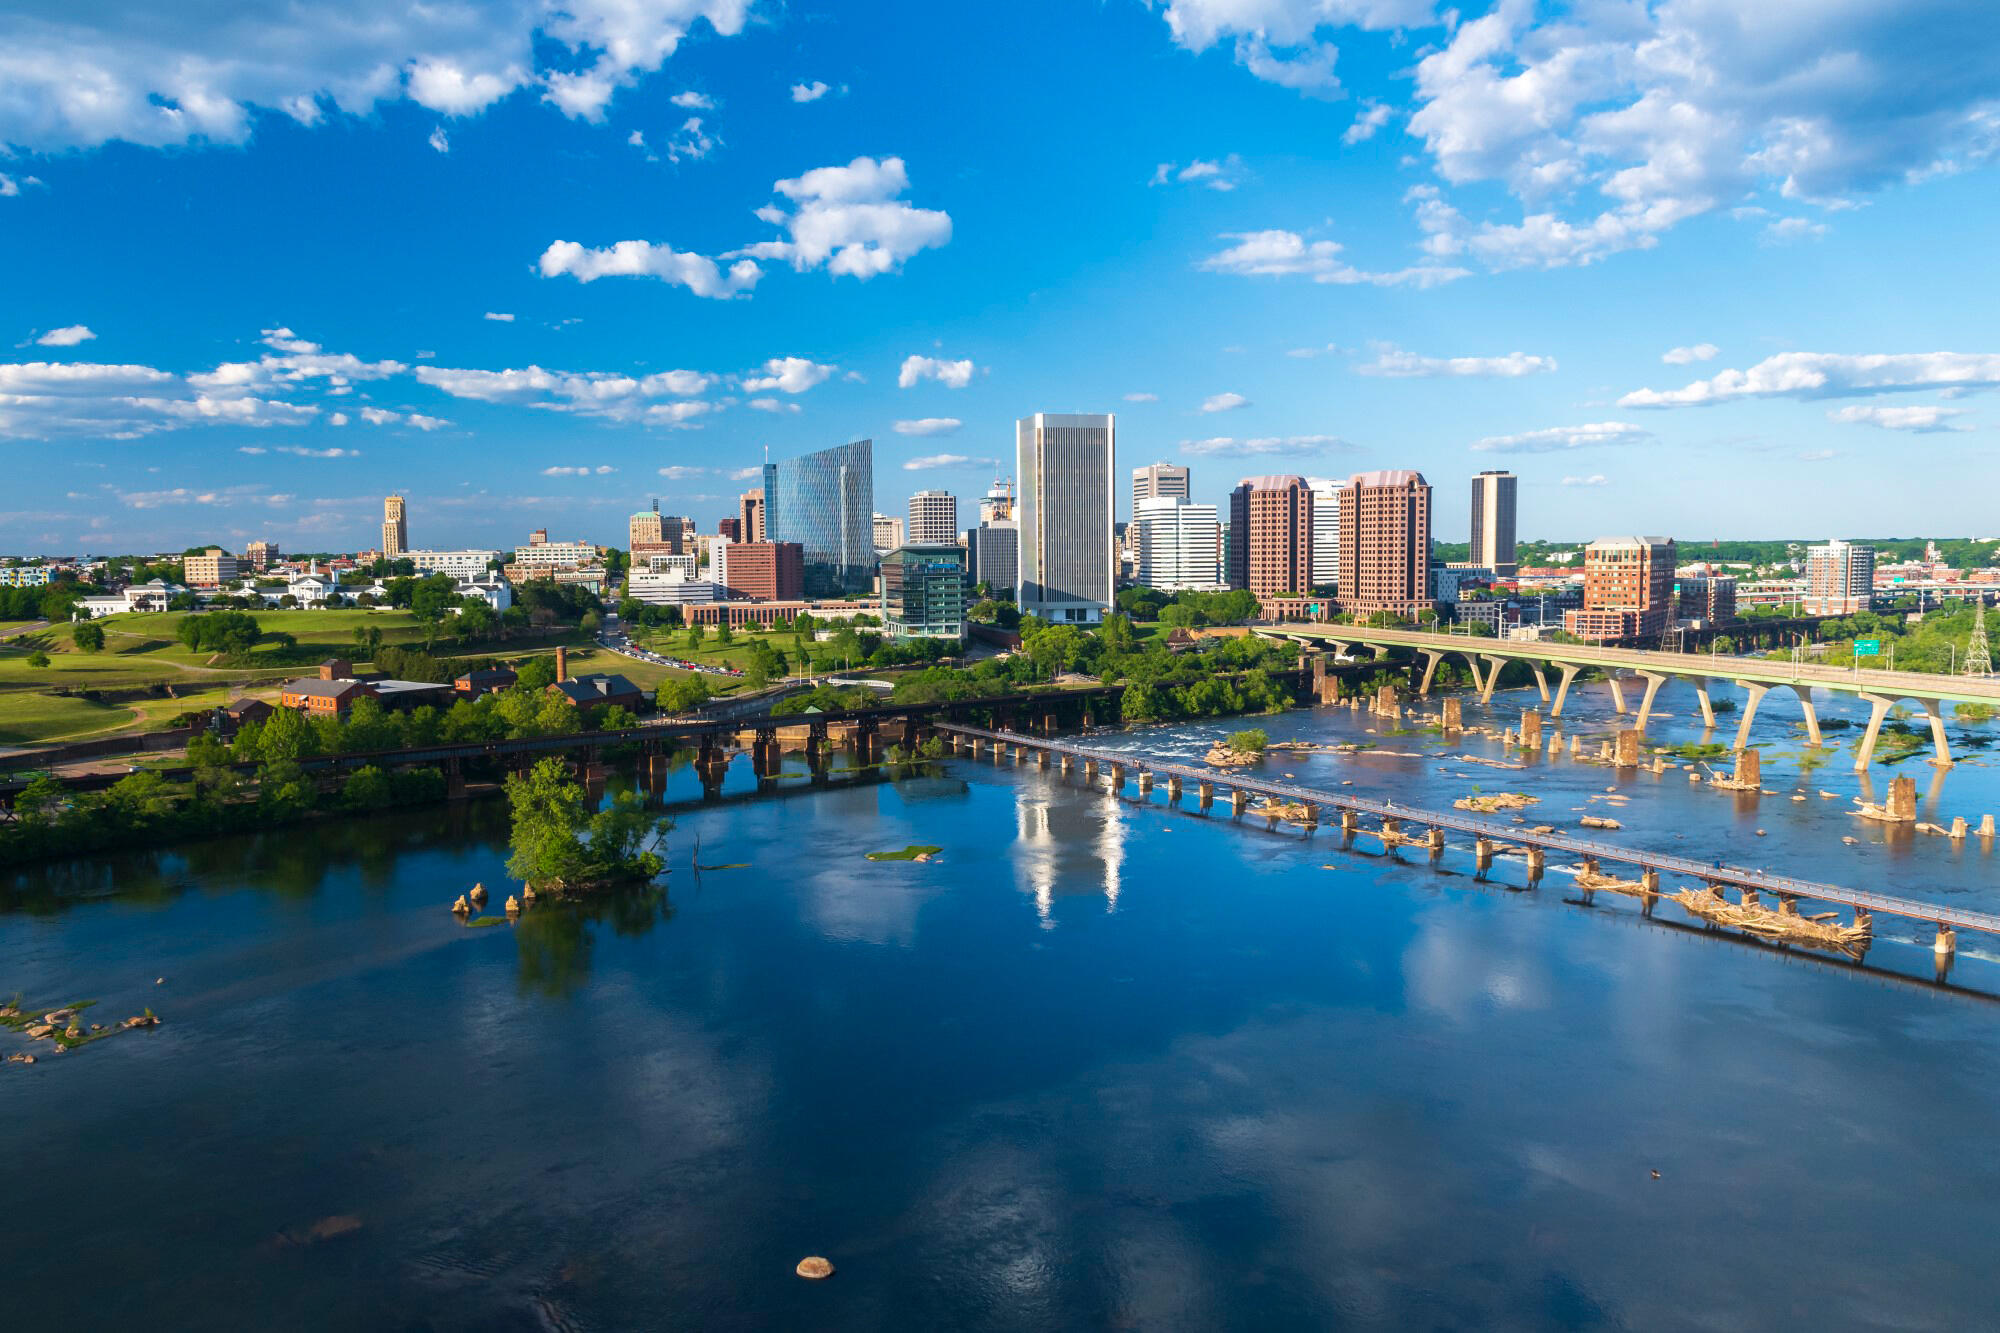 An aerial photo of the Richmond city skyline along a river under a blue sky.